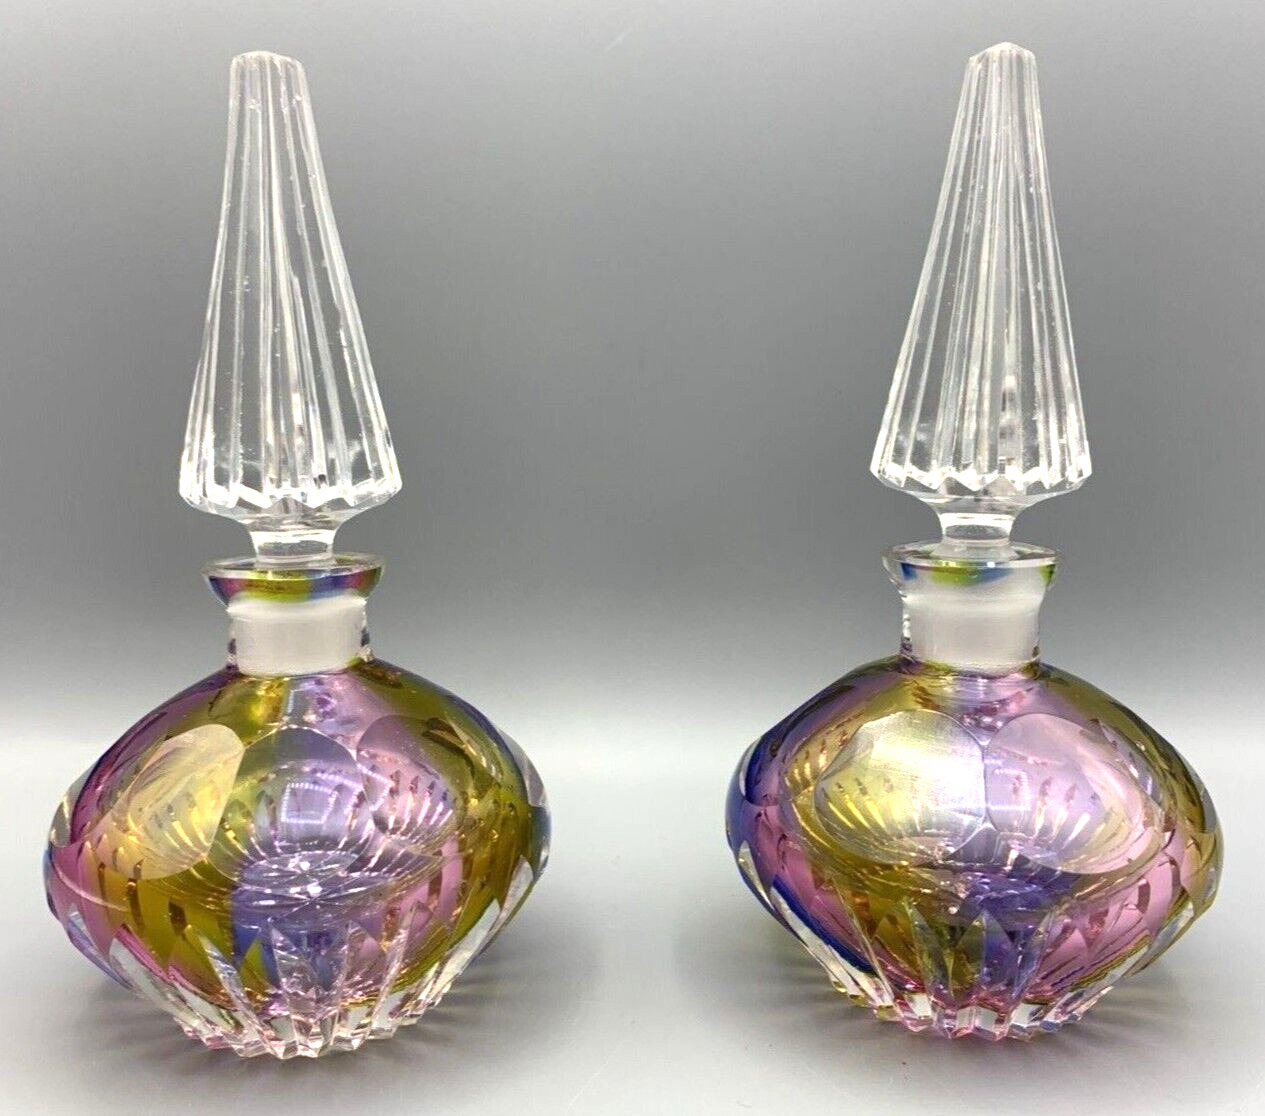 2 LG RAINBOW CUT GLASS CRYSTAL PERFUME SCENT BOTTLES BRILLIANT ABP STYLE VTG